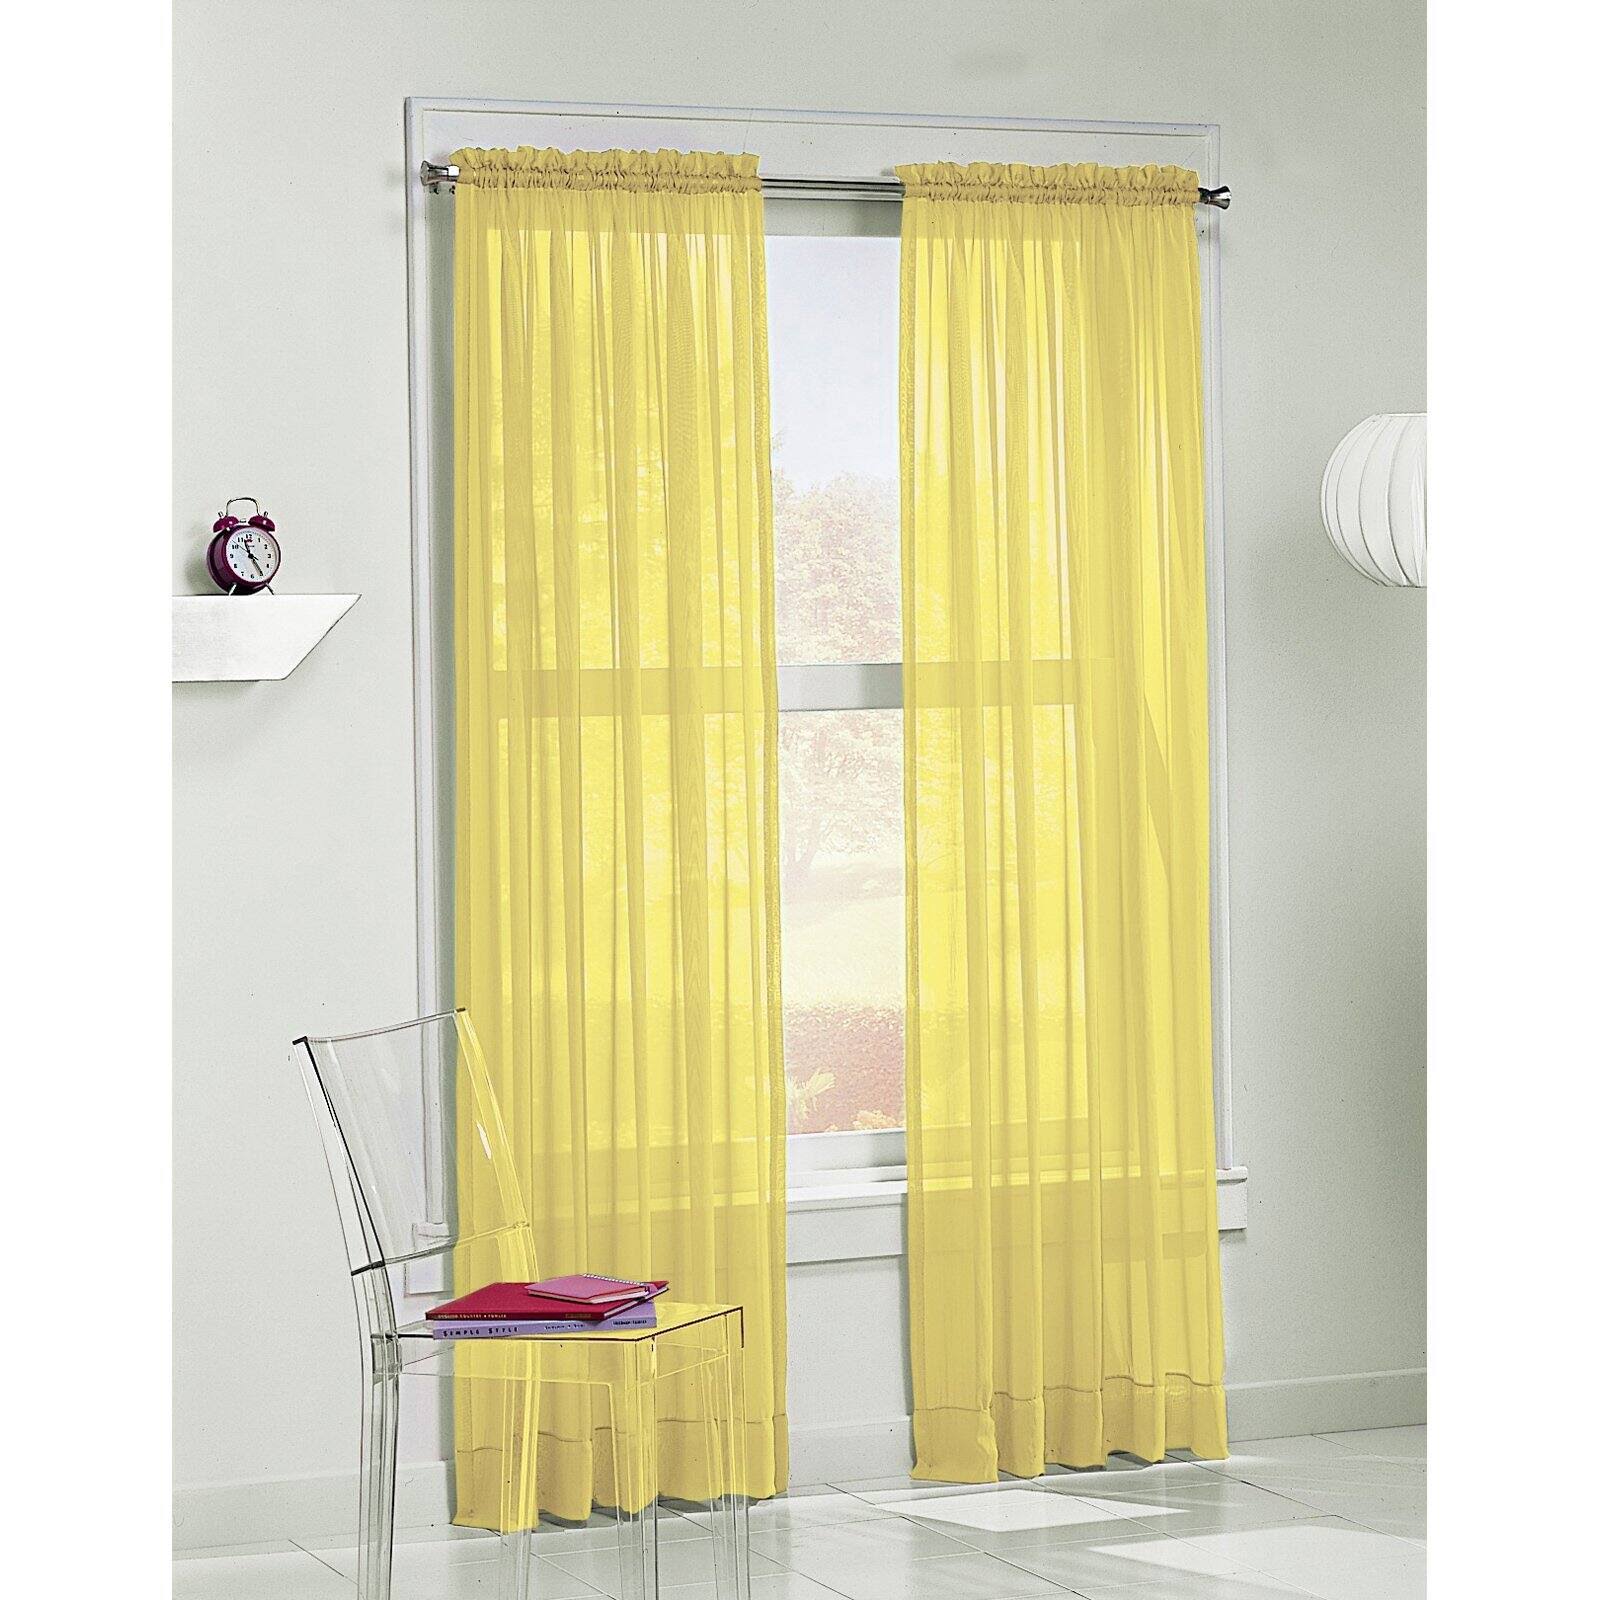 No. 918 Calypso Sheer Voile Rod Pocket Curtain Panel, 59" x 63", Lemon Yellow